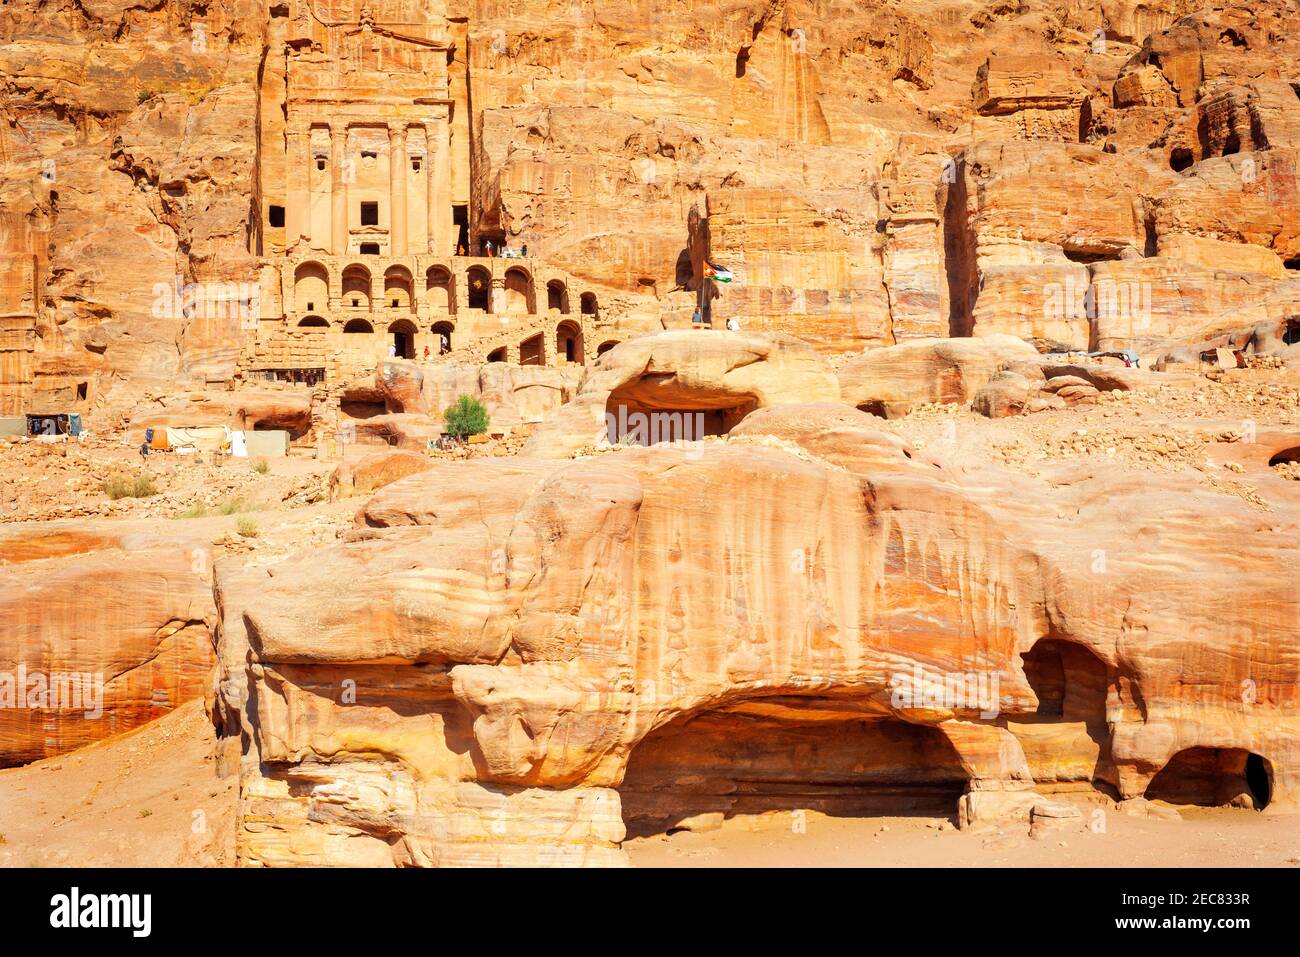 Street of Facades, Tombs of Petra, Jordan. The Corinthian Tomb and the Palace Tomb of the Royal Tombs in the rock city of Petra. The Urn Tomb of the R Stock Photo